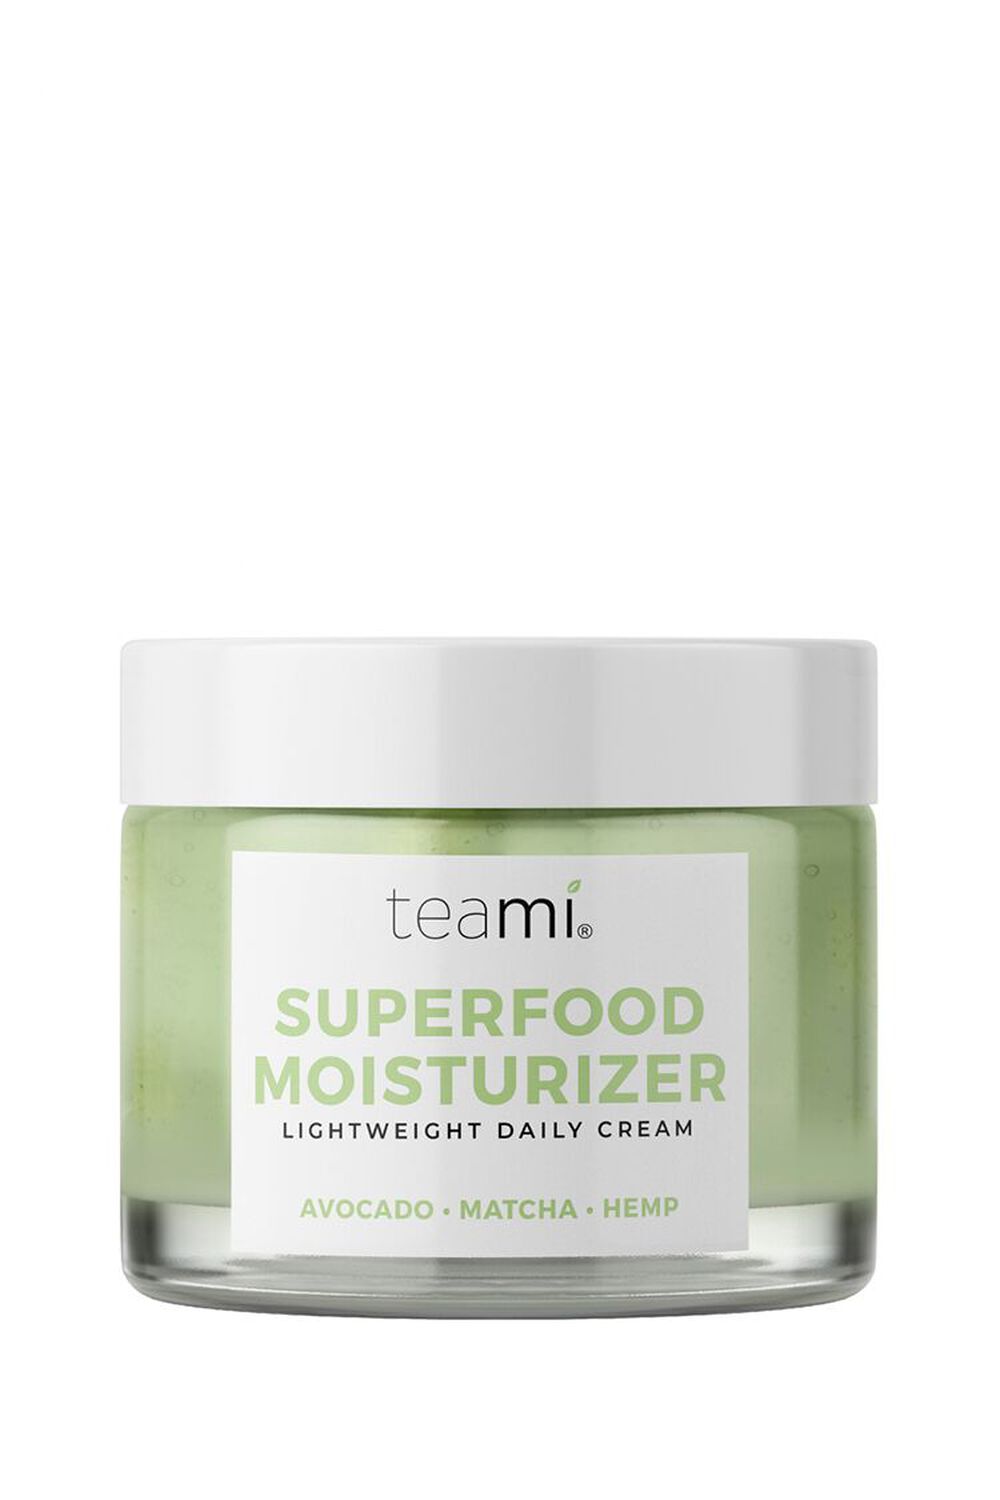 Teami Superfood Moisturizer Lightweight Daily Cream, image 2